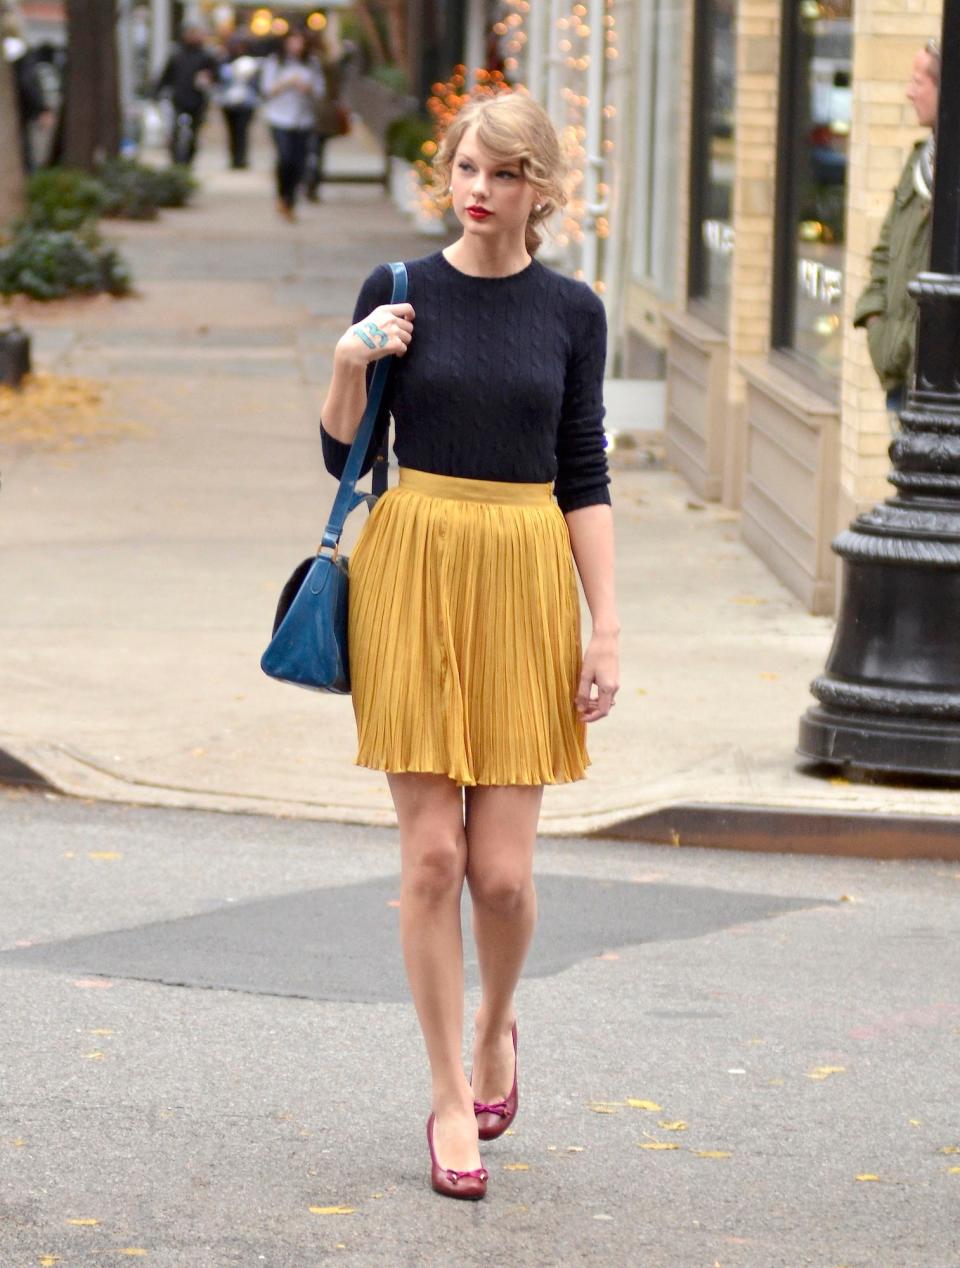 Taylor Swift in New York City on November 22, 2011.